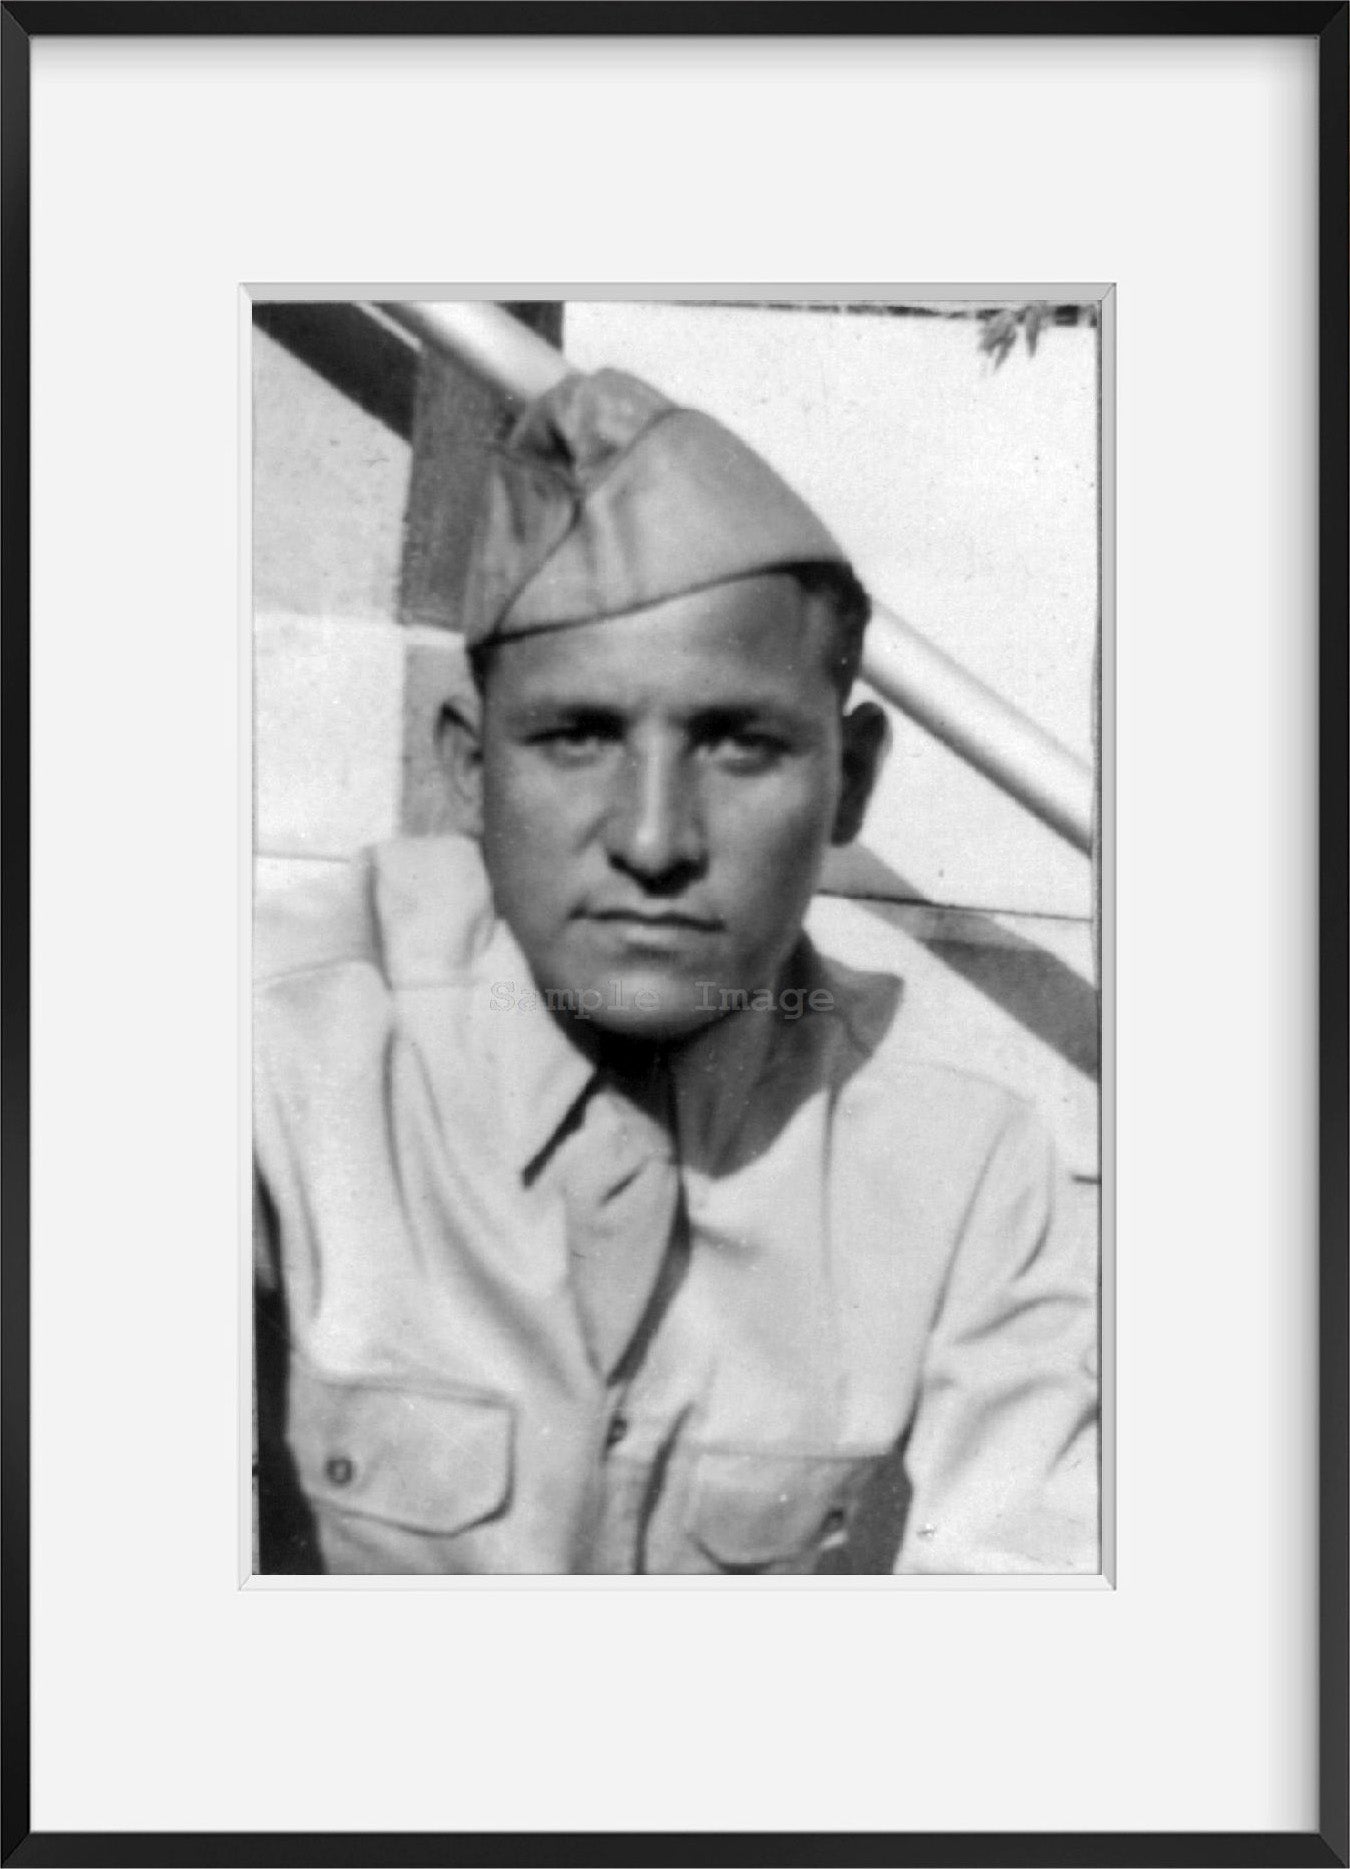 Photo: Library of Congress employee killed in World War II - Alexander Chavez